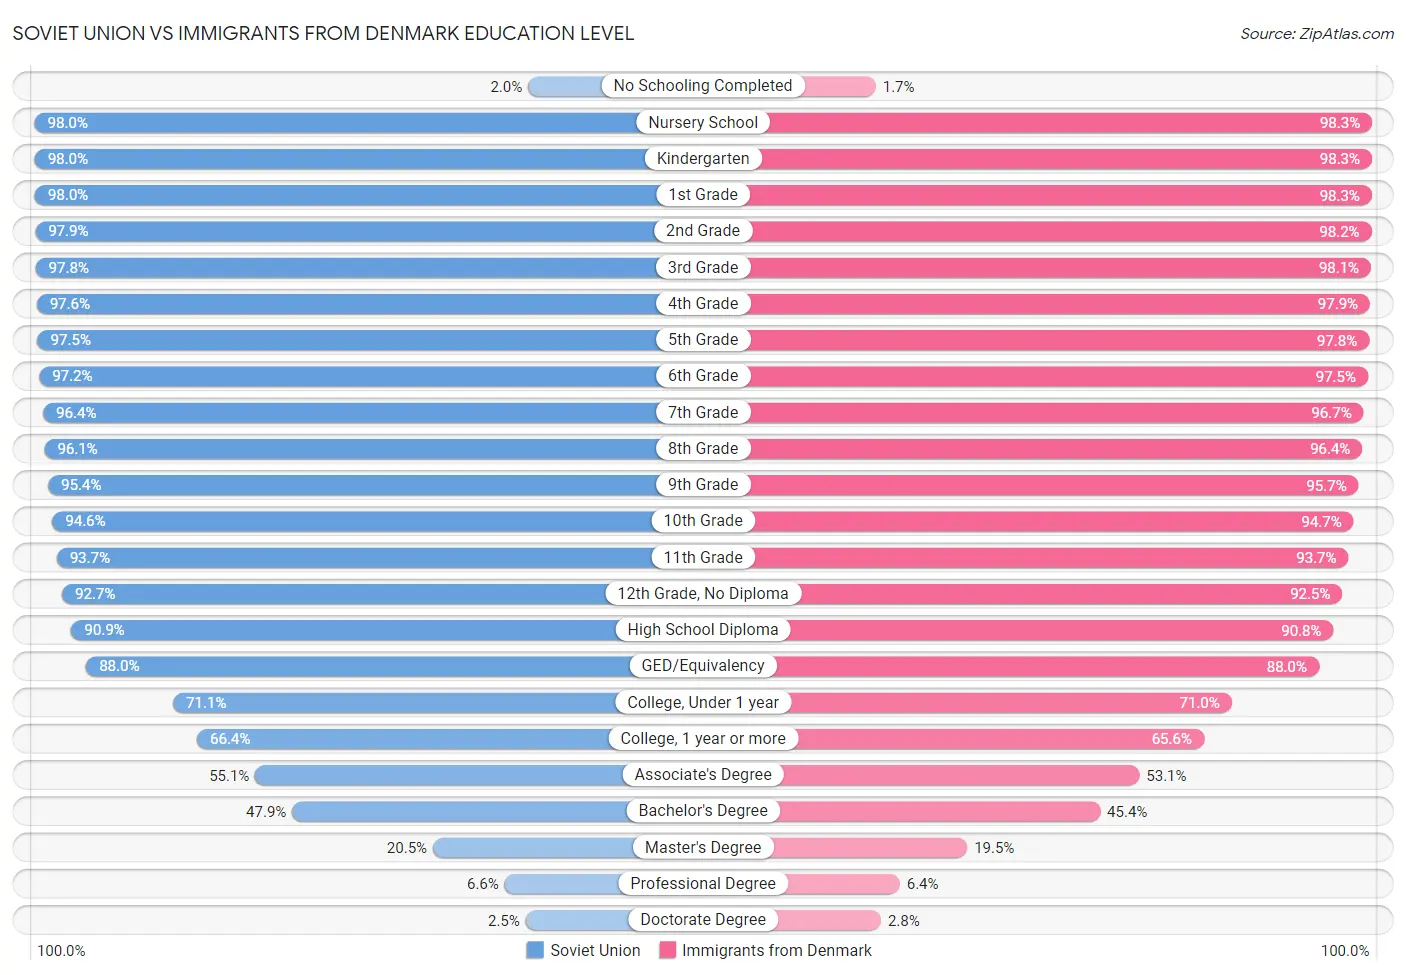 Soviet Union vs Immigrants from Denmark Education Level